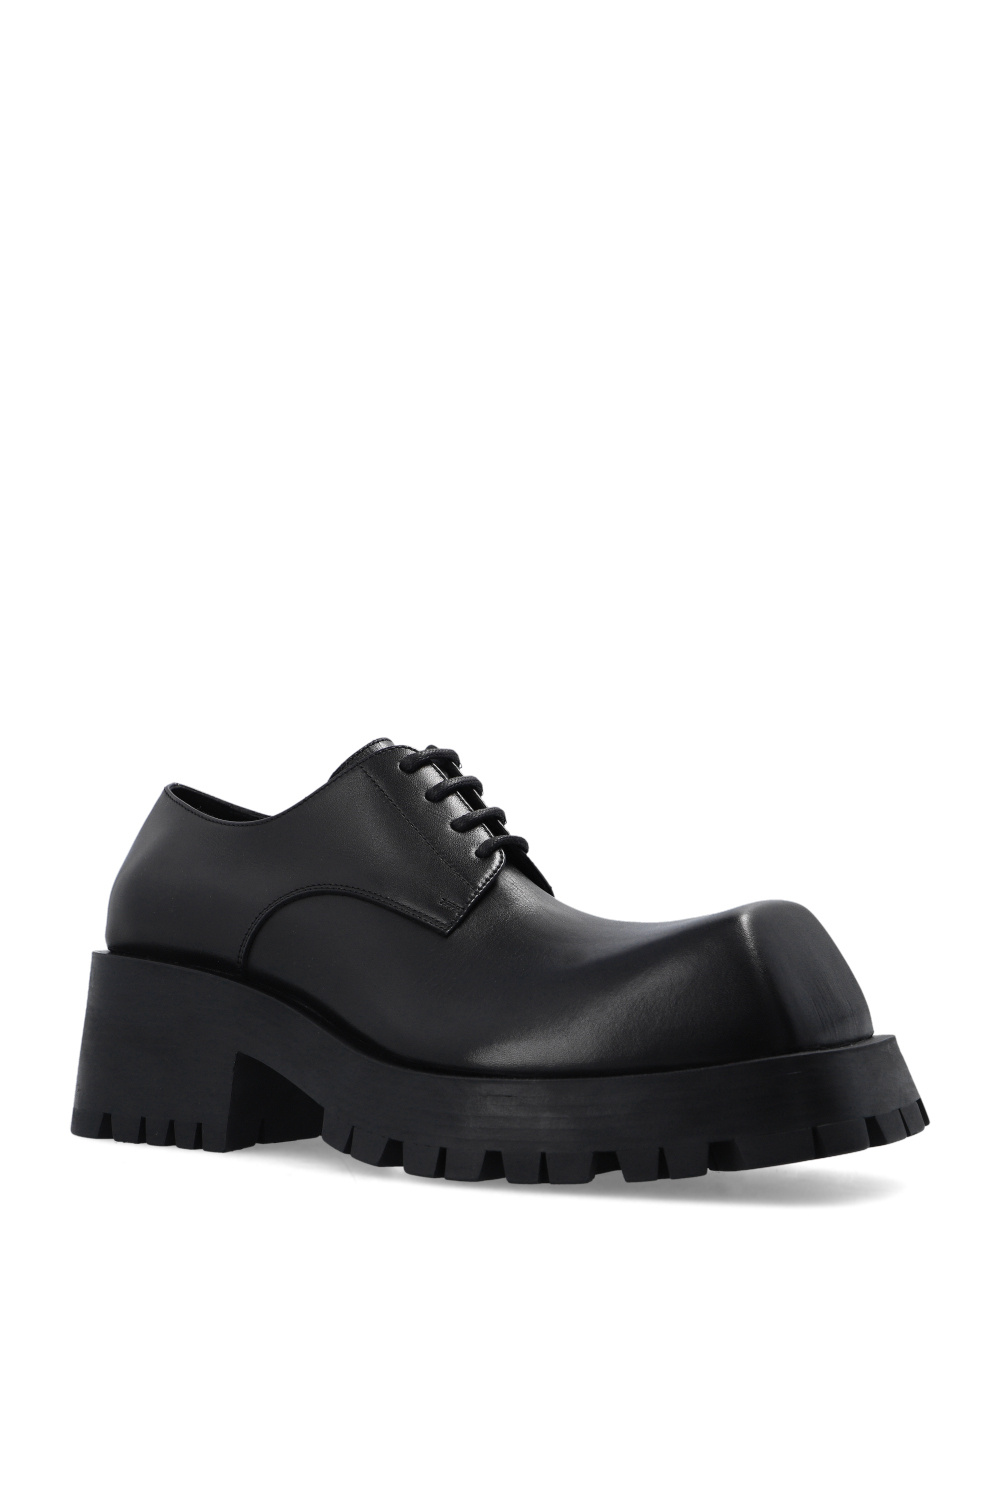 Balenciaga ‘Trooper’ heeled Derby shoes